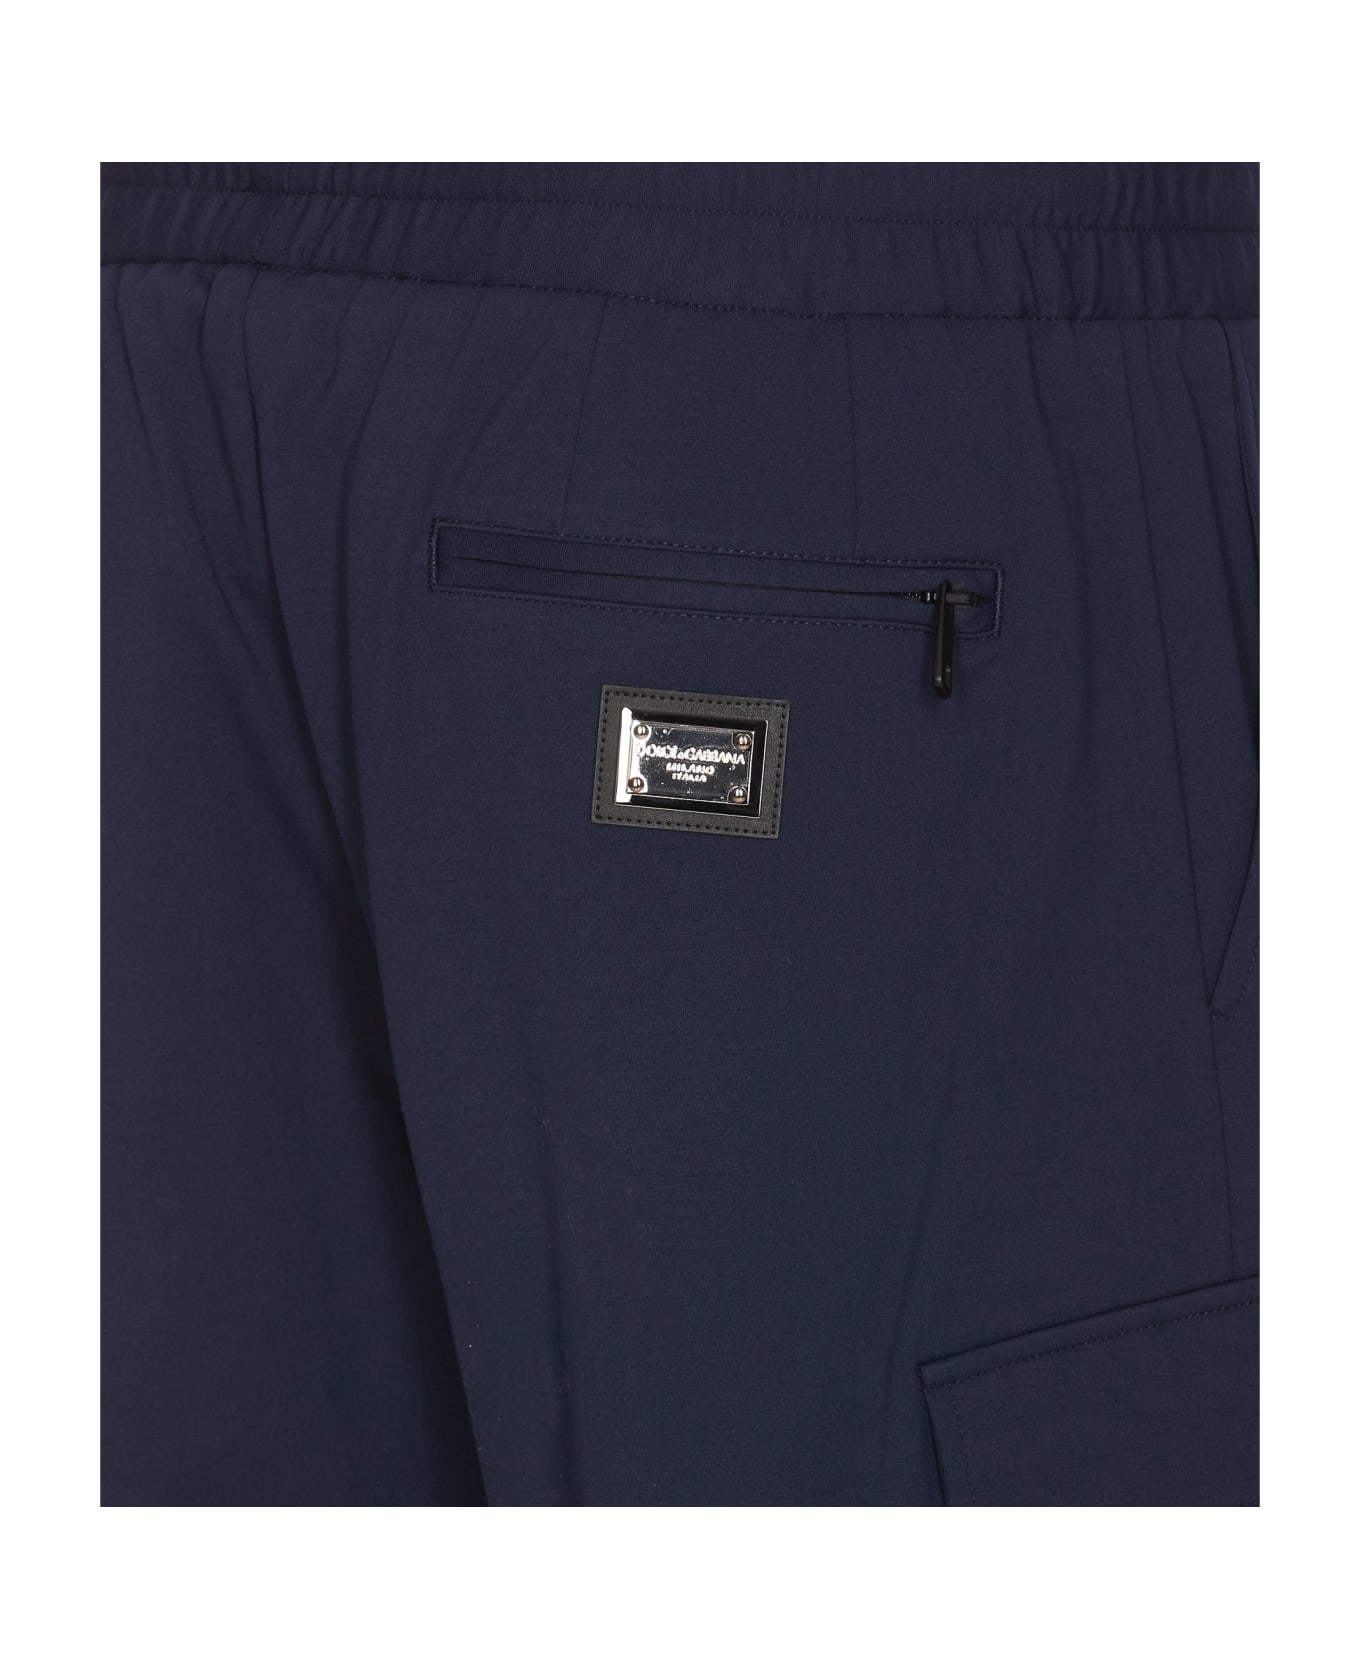 Dolce & Gabbana Cotton Blend Pants - blue スウェットパンツ